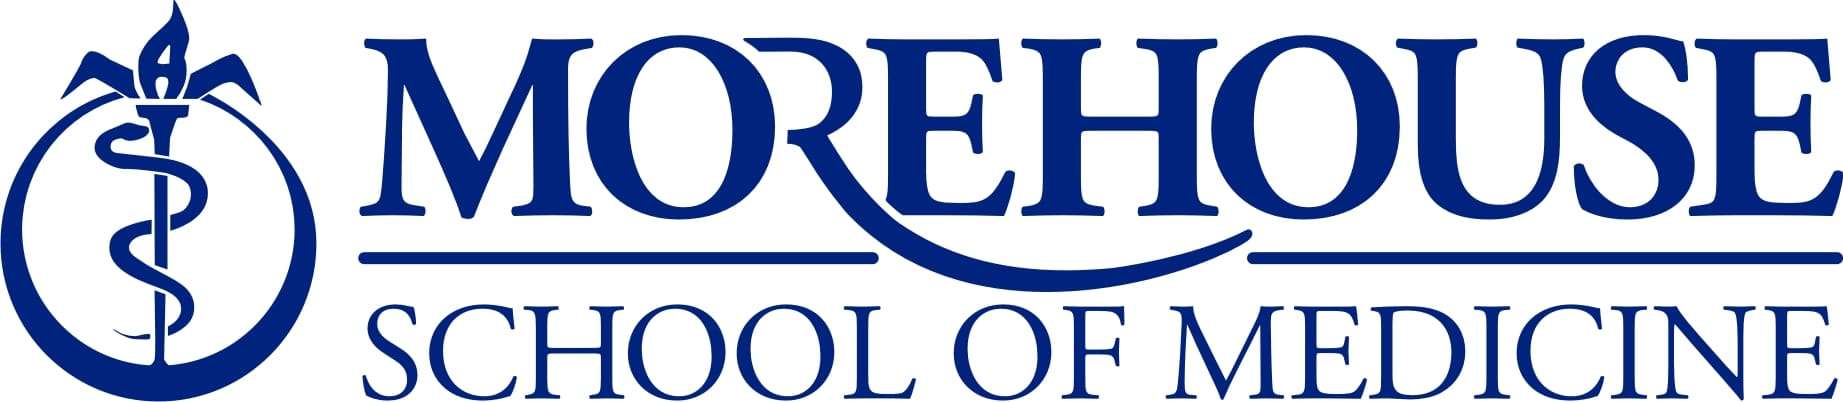 Morehouse-School-of-Medicine-Logo